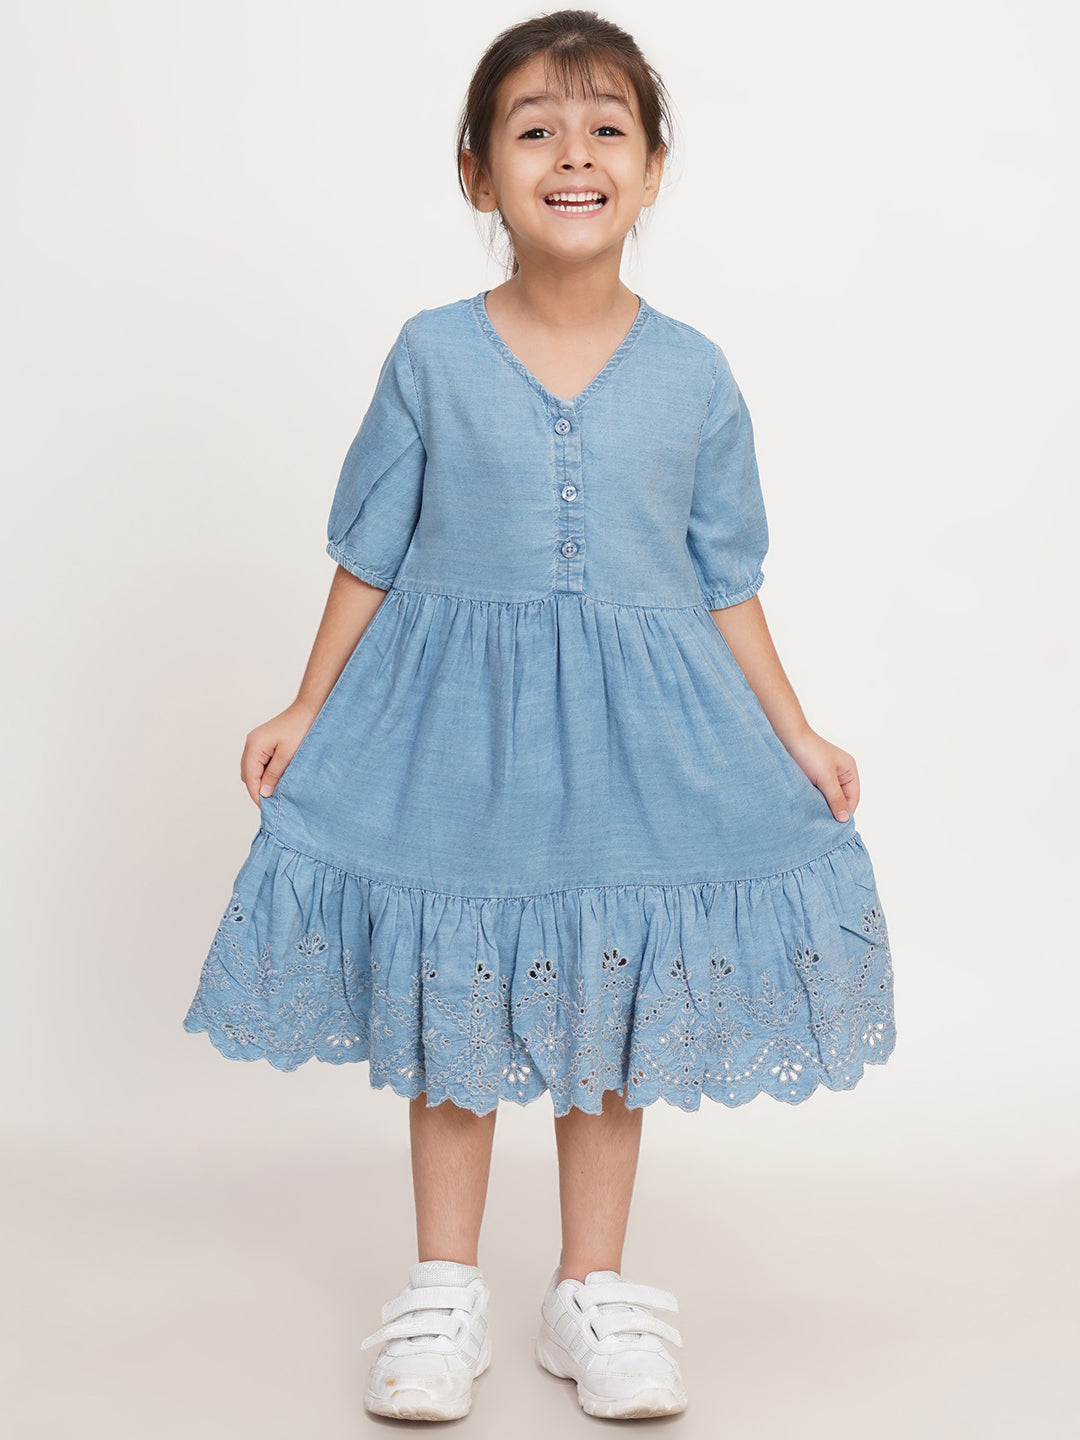 CREATIVE KID'S Girl Blue Schiffli Denim Fit & Flare Dress